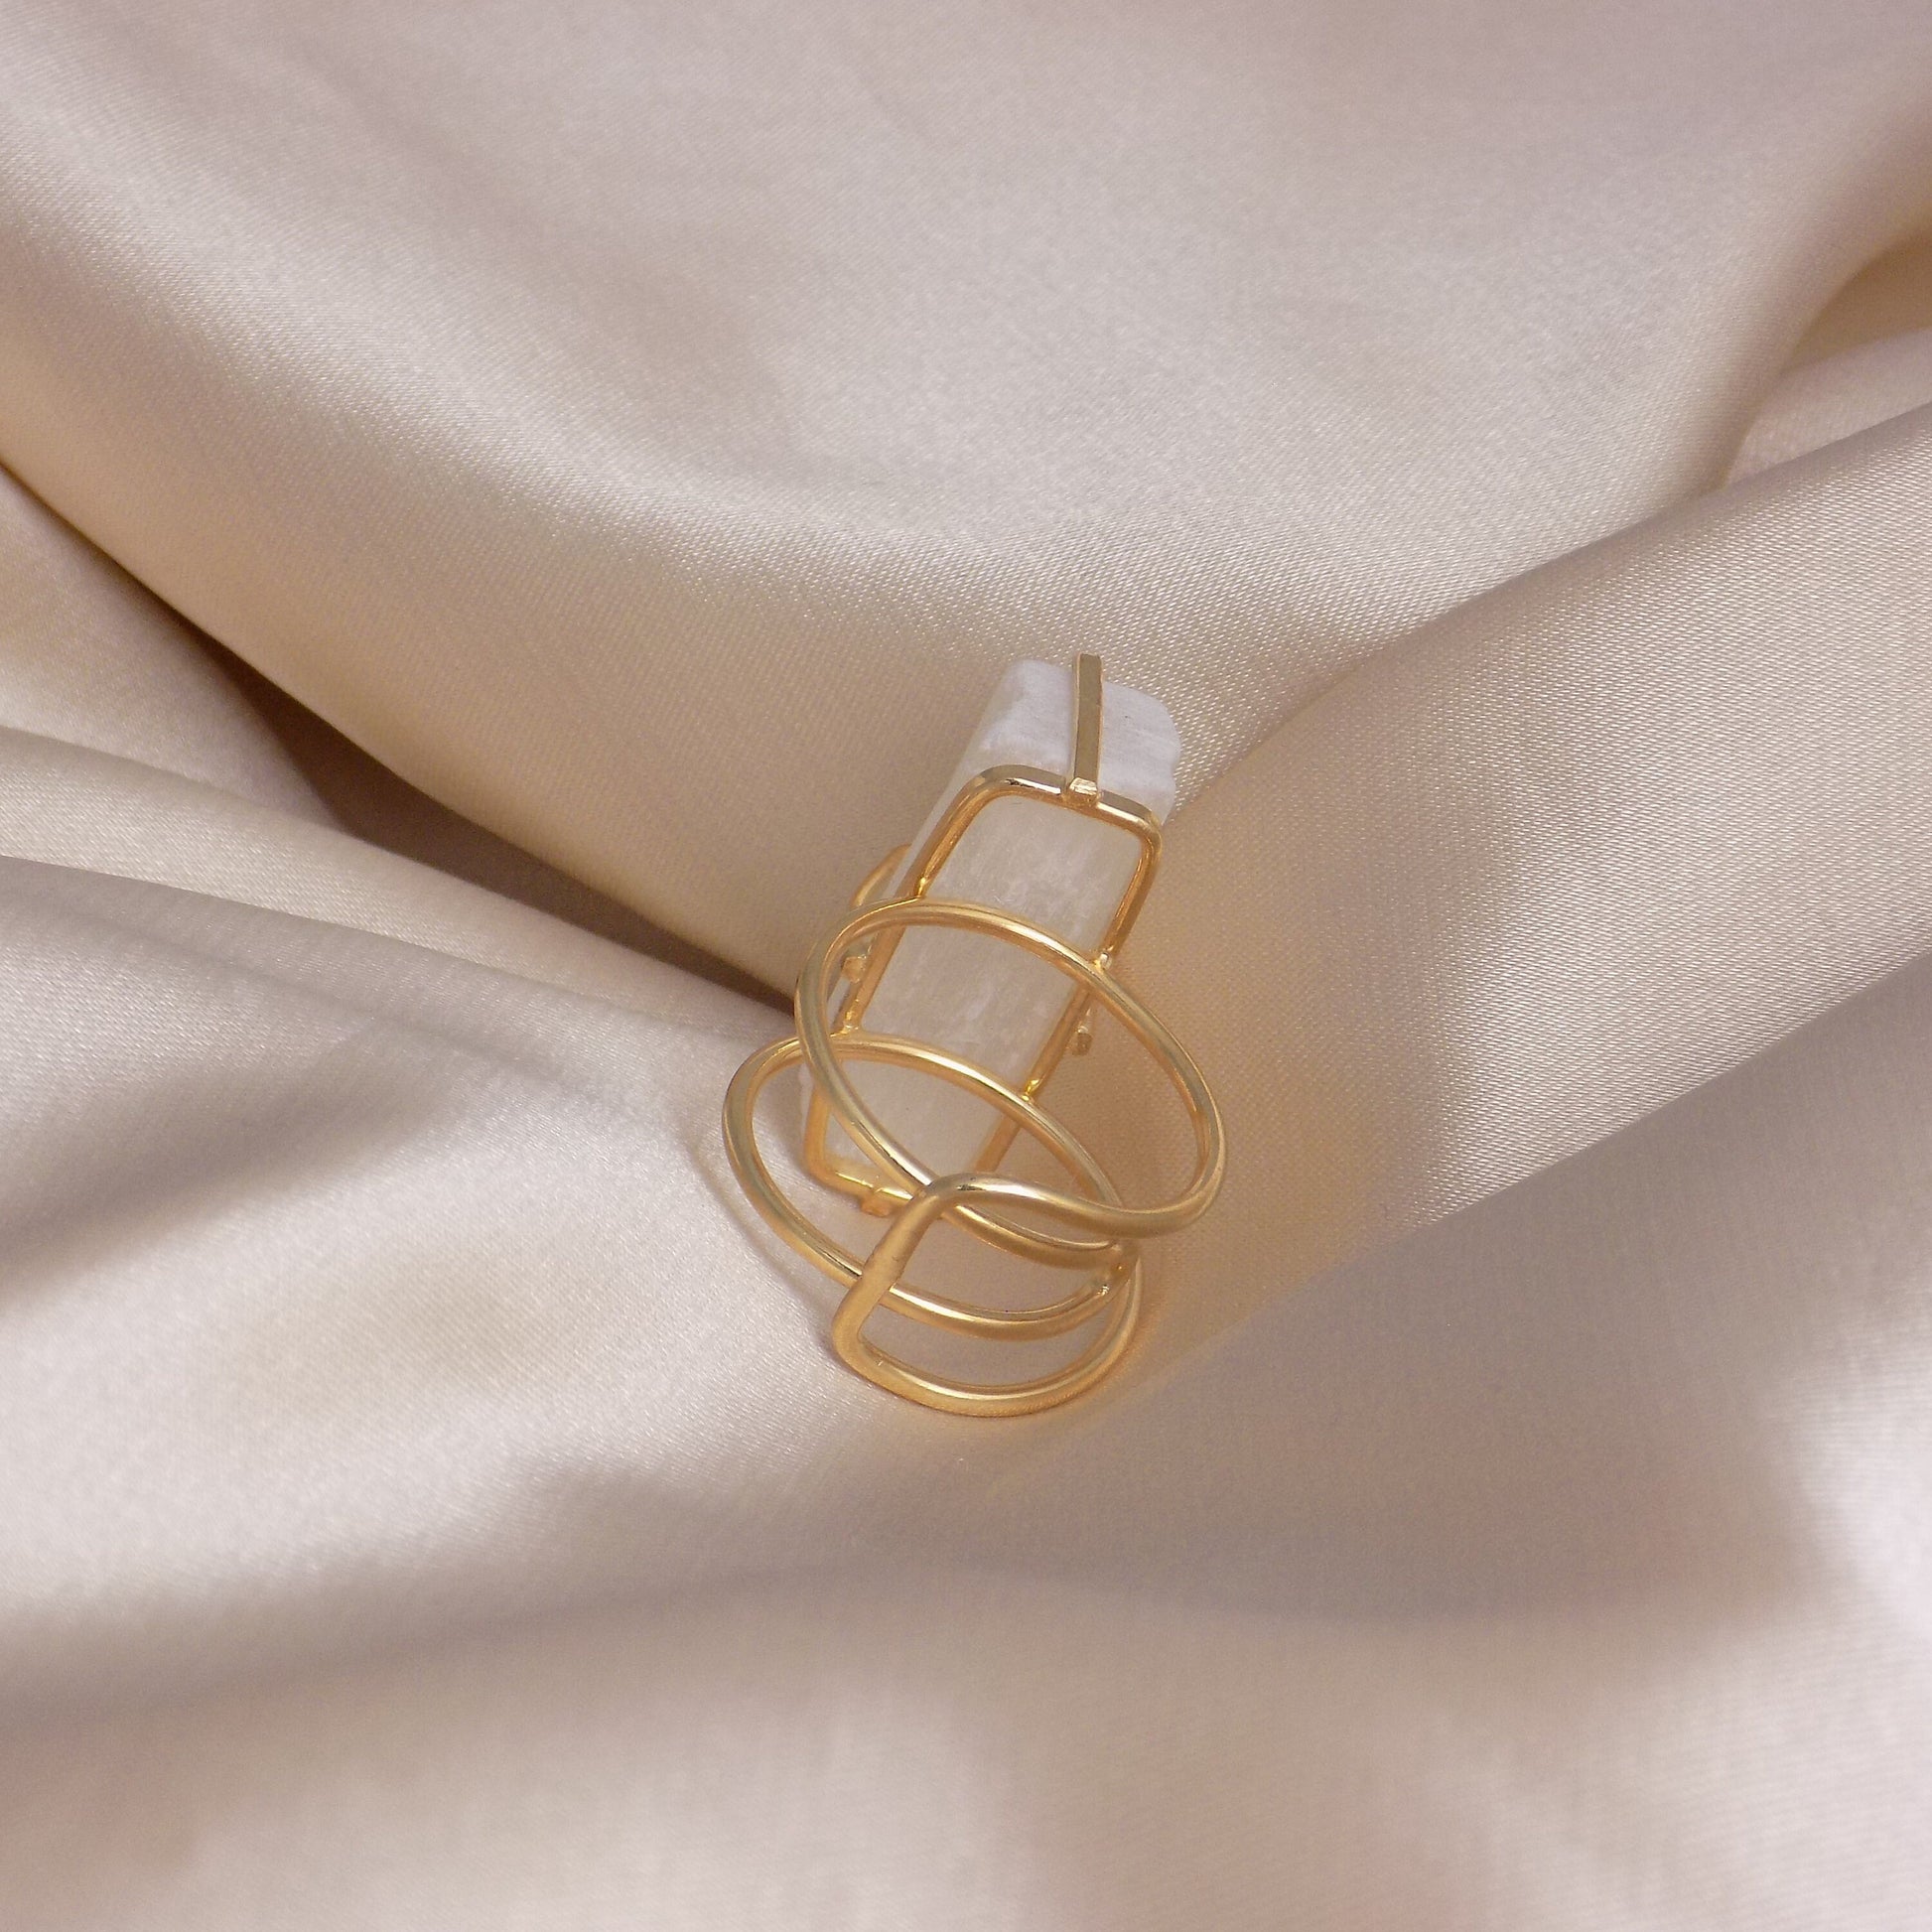 Boho White Selenite Ring Gold Plated Adjustable - Chakra Crystal Ring